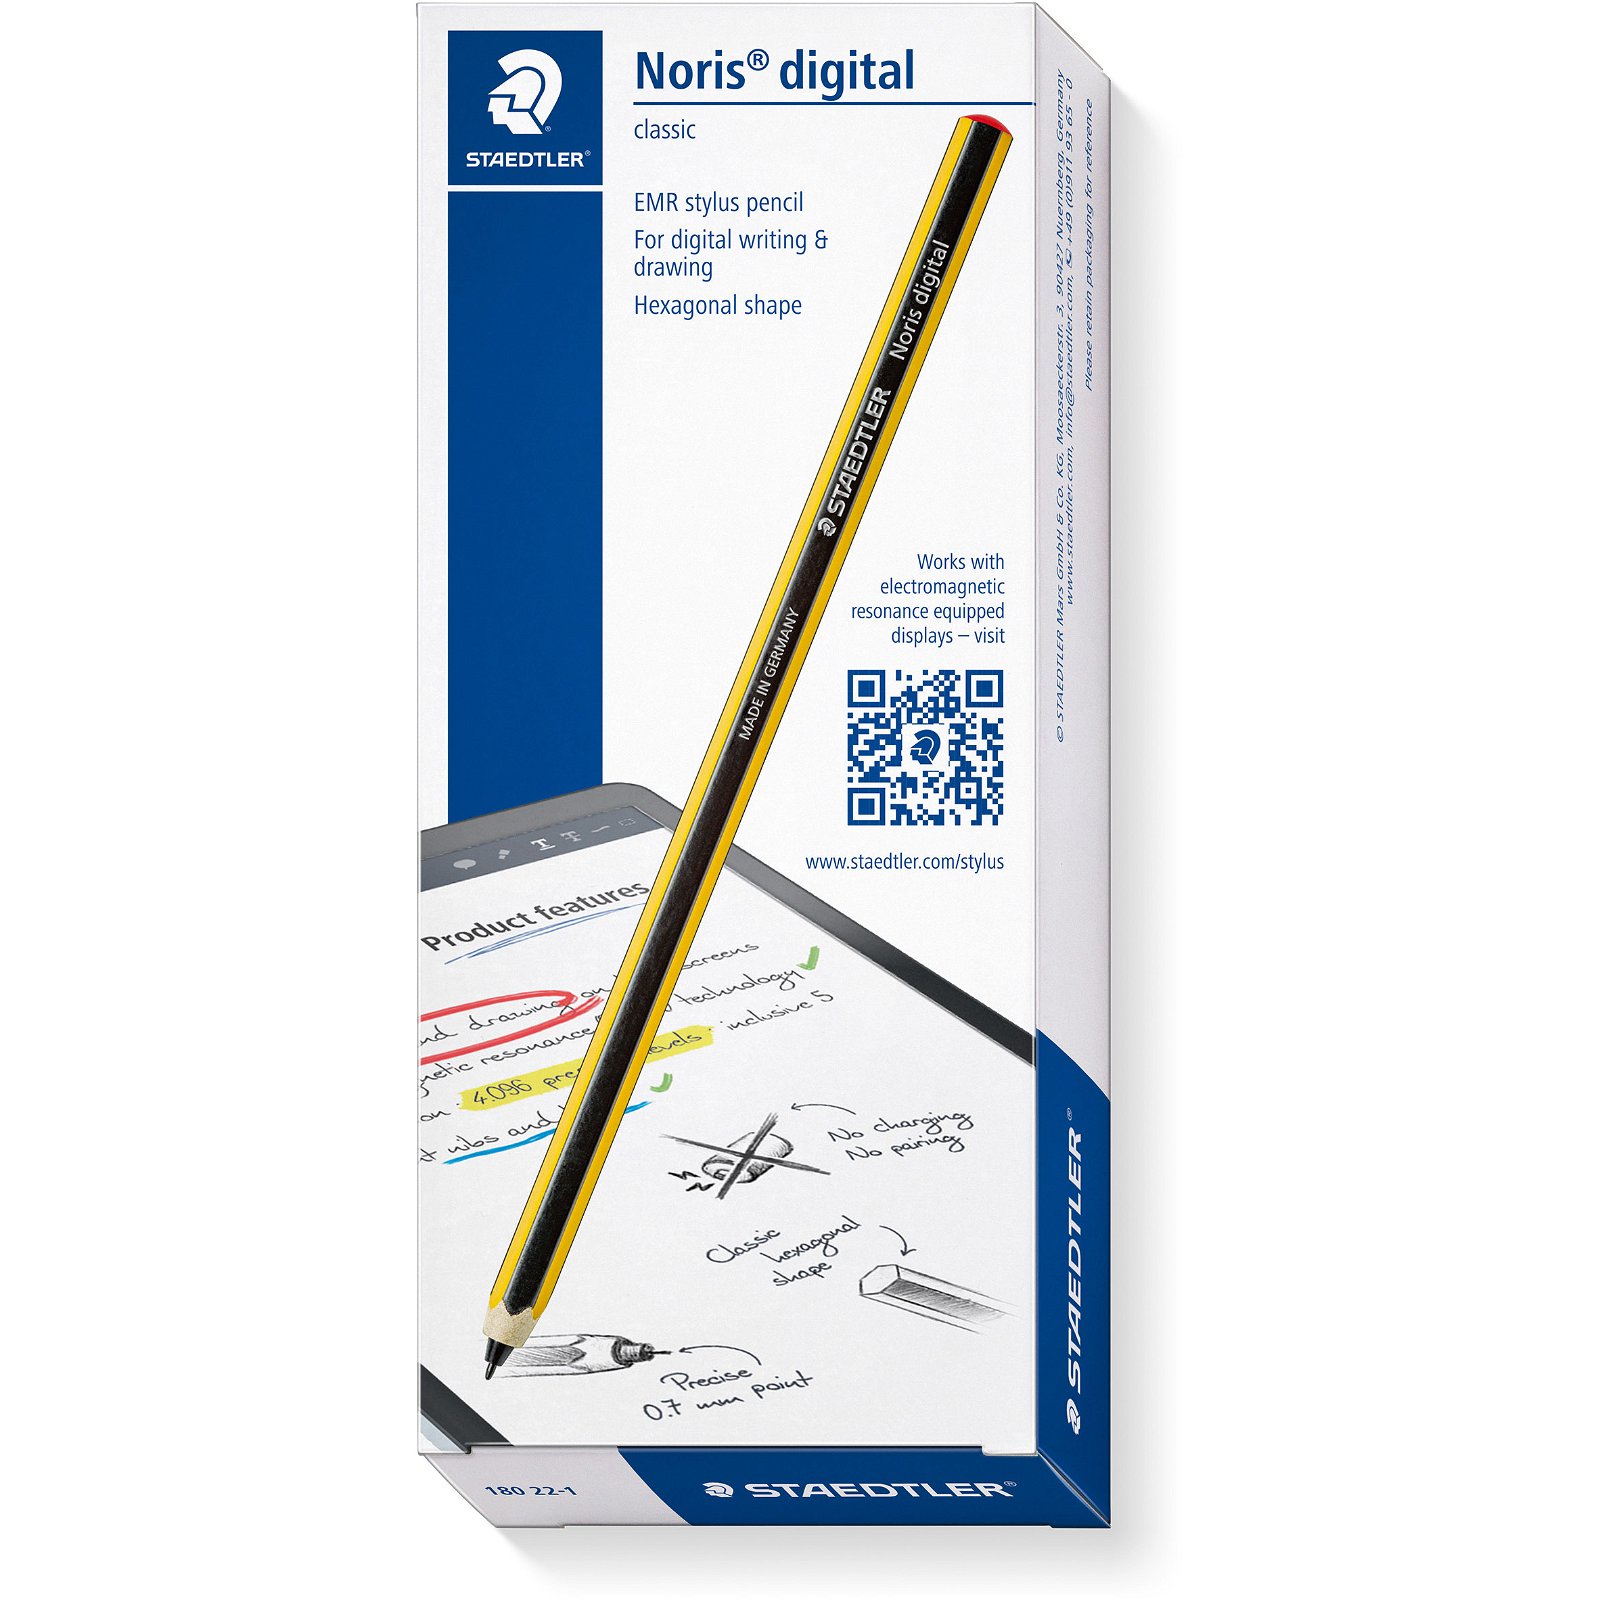 STAEDTLER Noris Digital Stylus pen